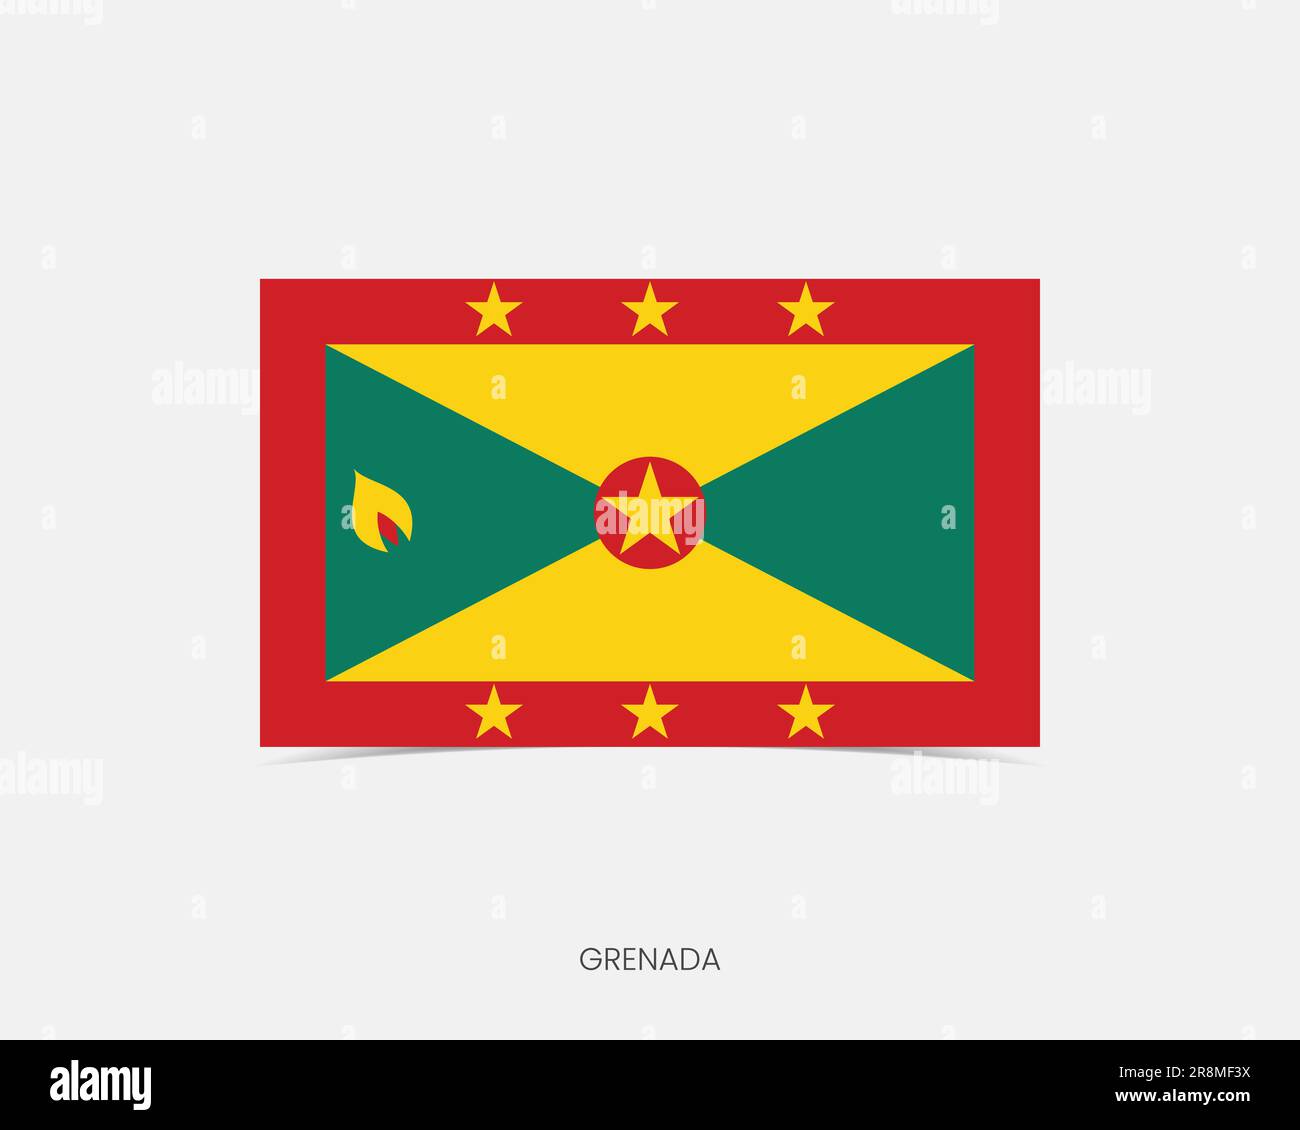 Grenada Rectangle flag icon with shadow. Stock Vector